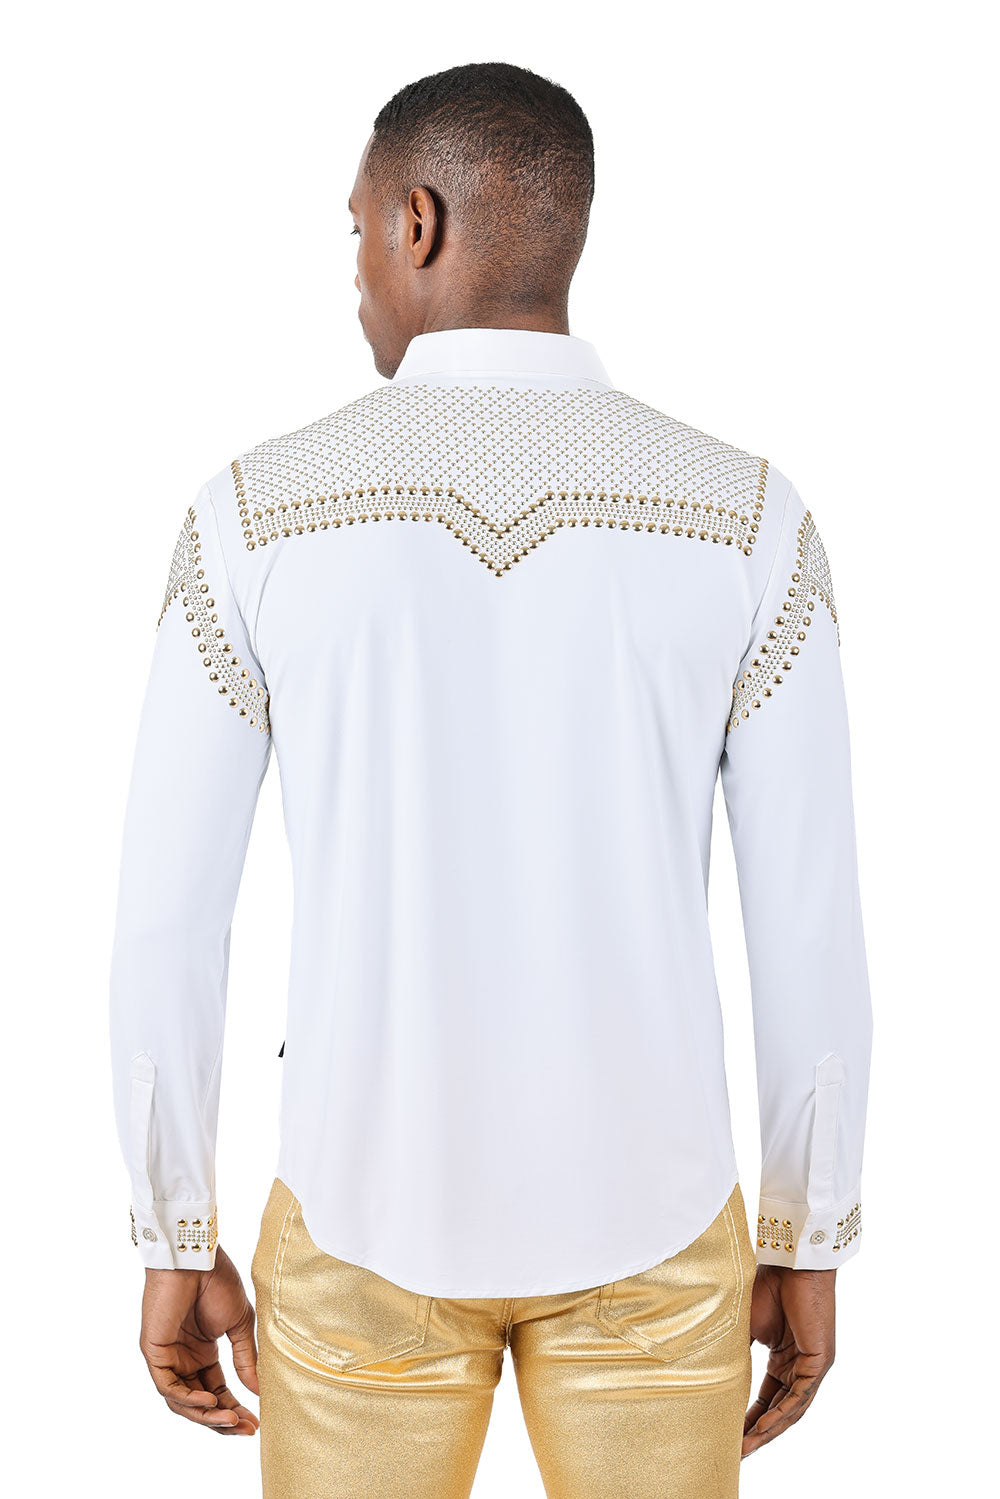 Barabas Men's Studded Premium Solid Long Sleeve Shirts 3B24 White